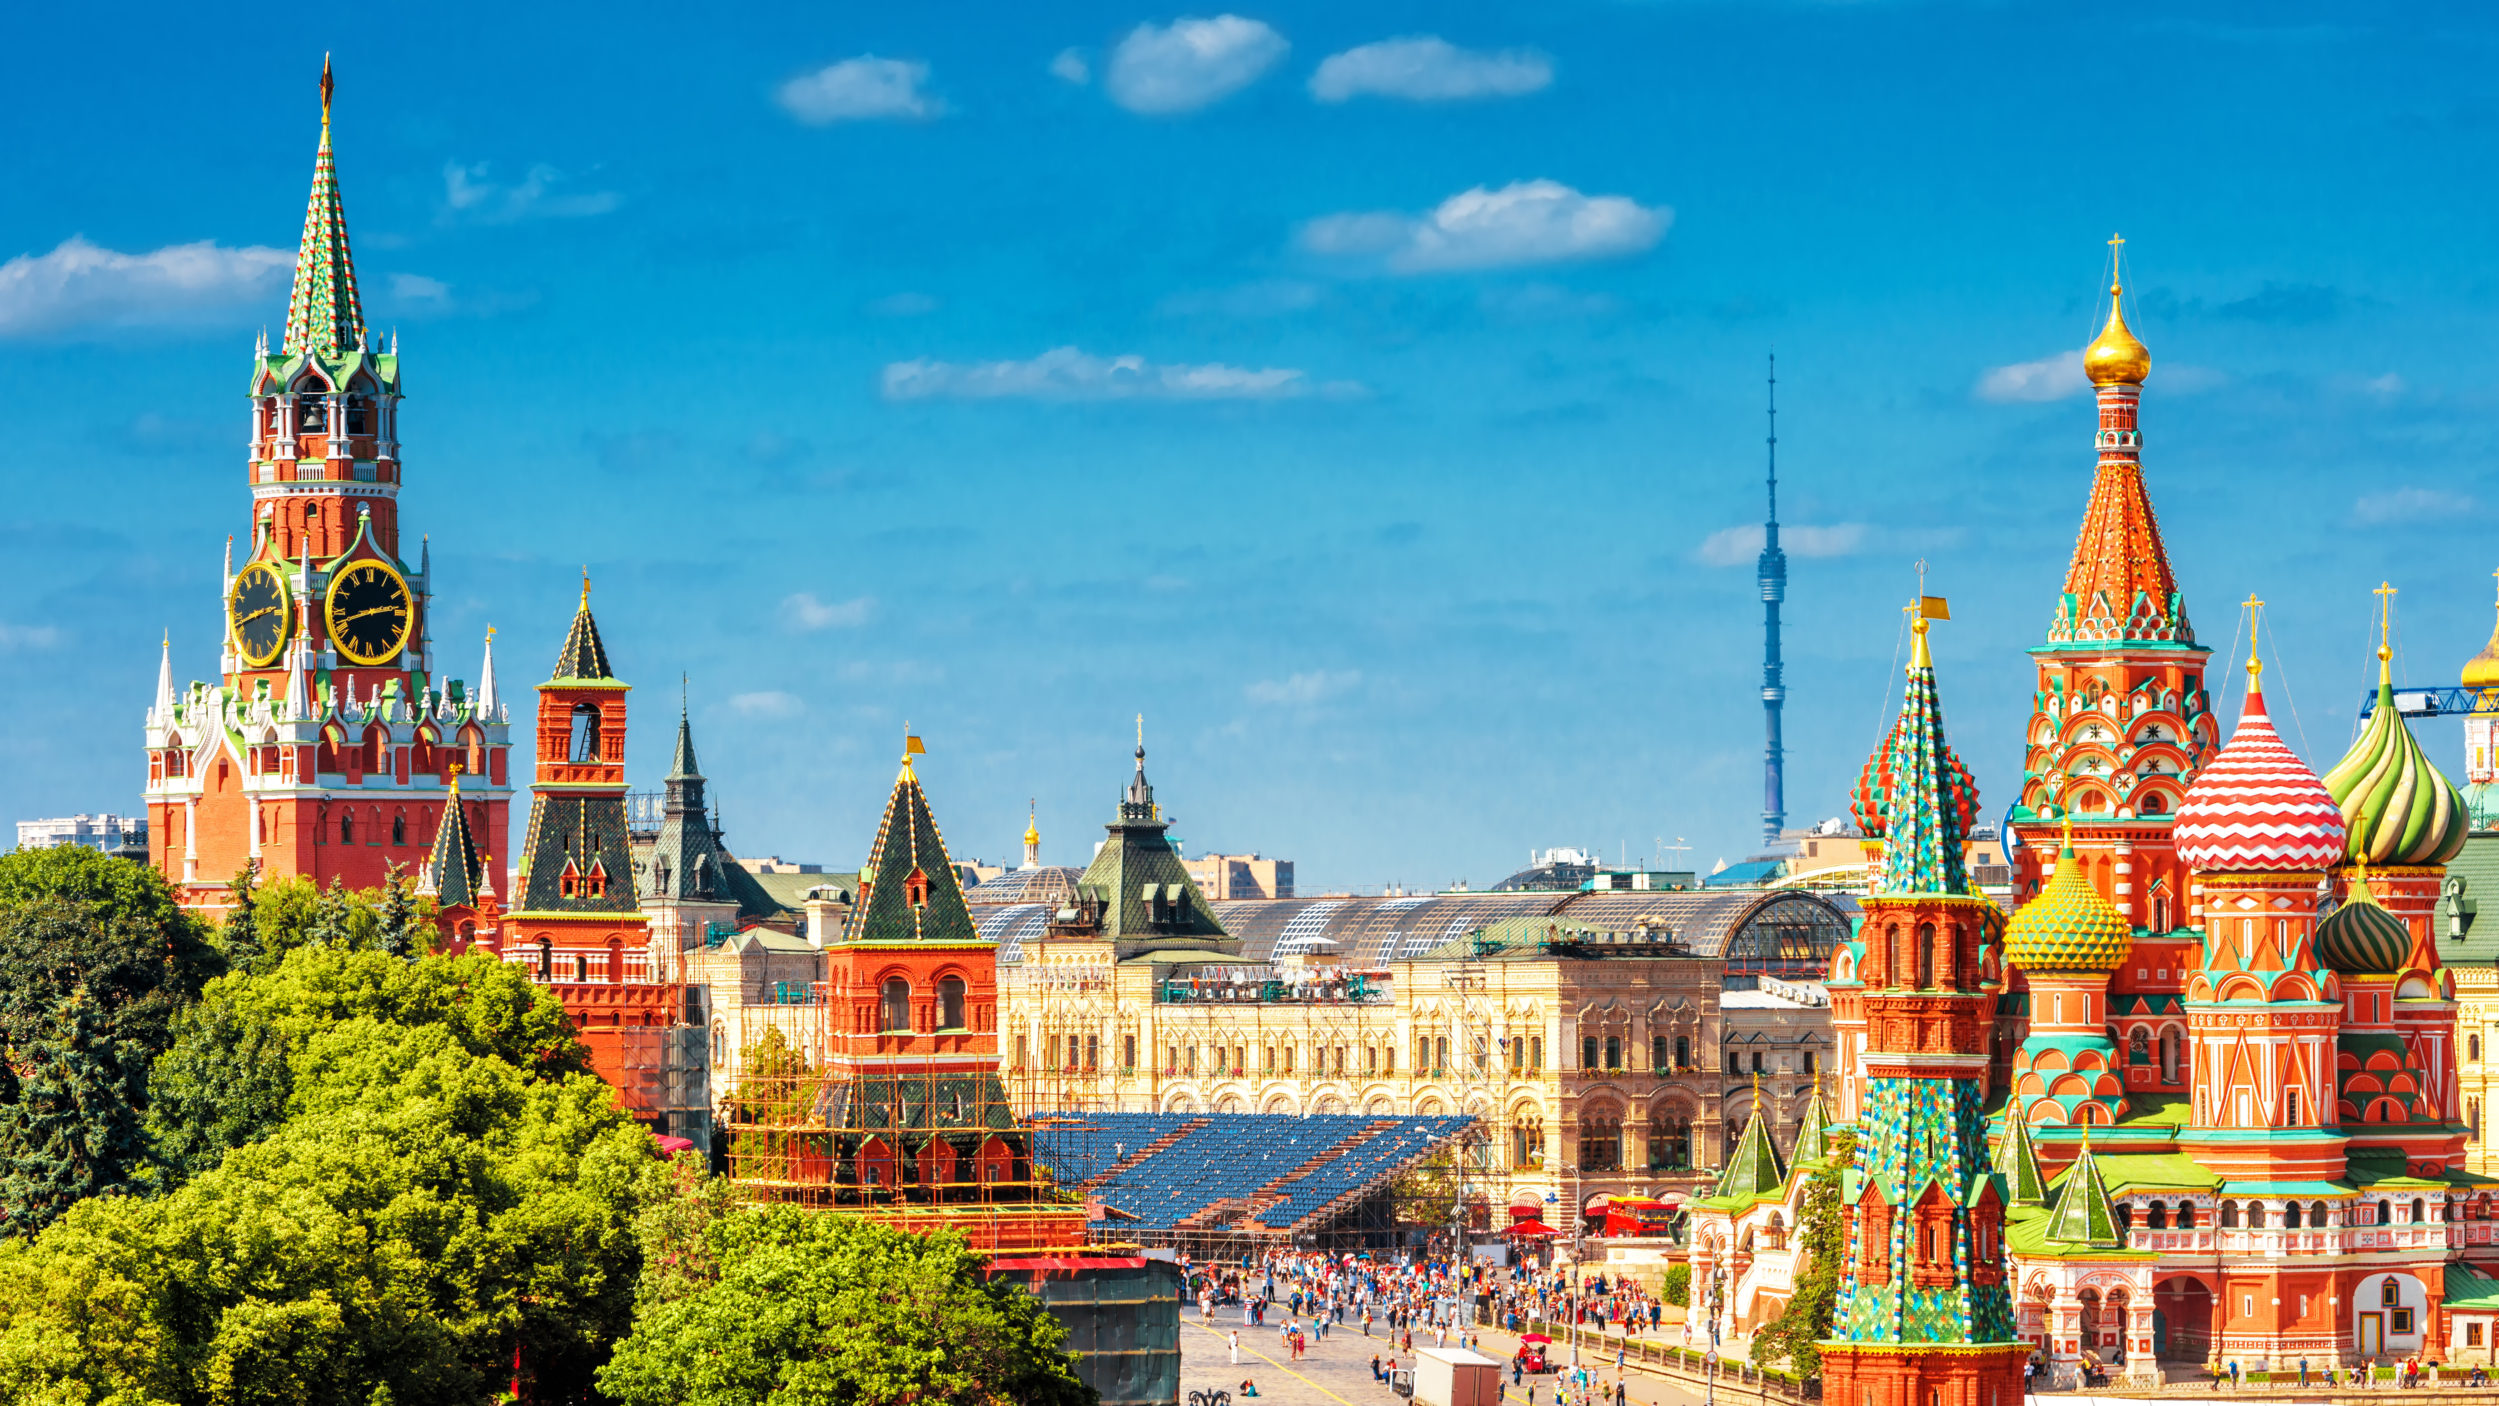 Russia [Shutterstock]